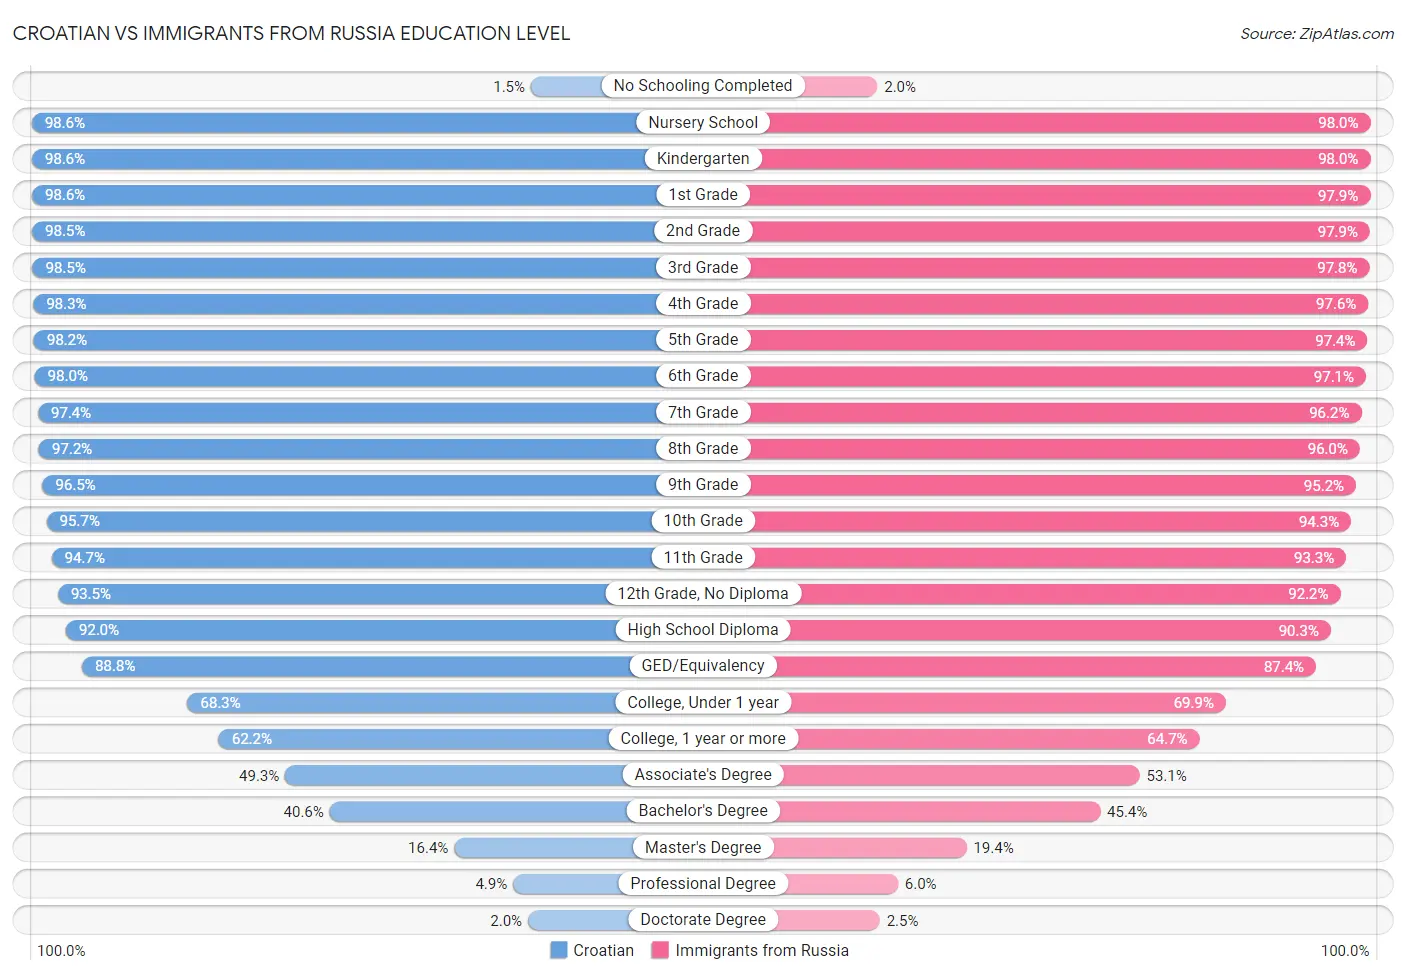 Croatian vs Immigrants from Russia Education Level